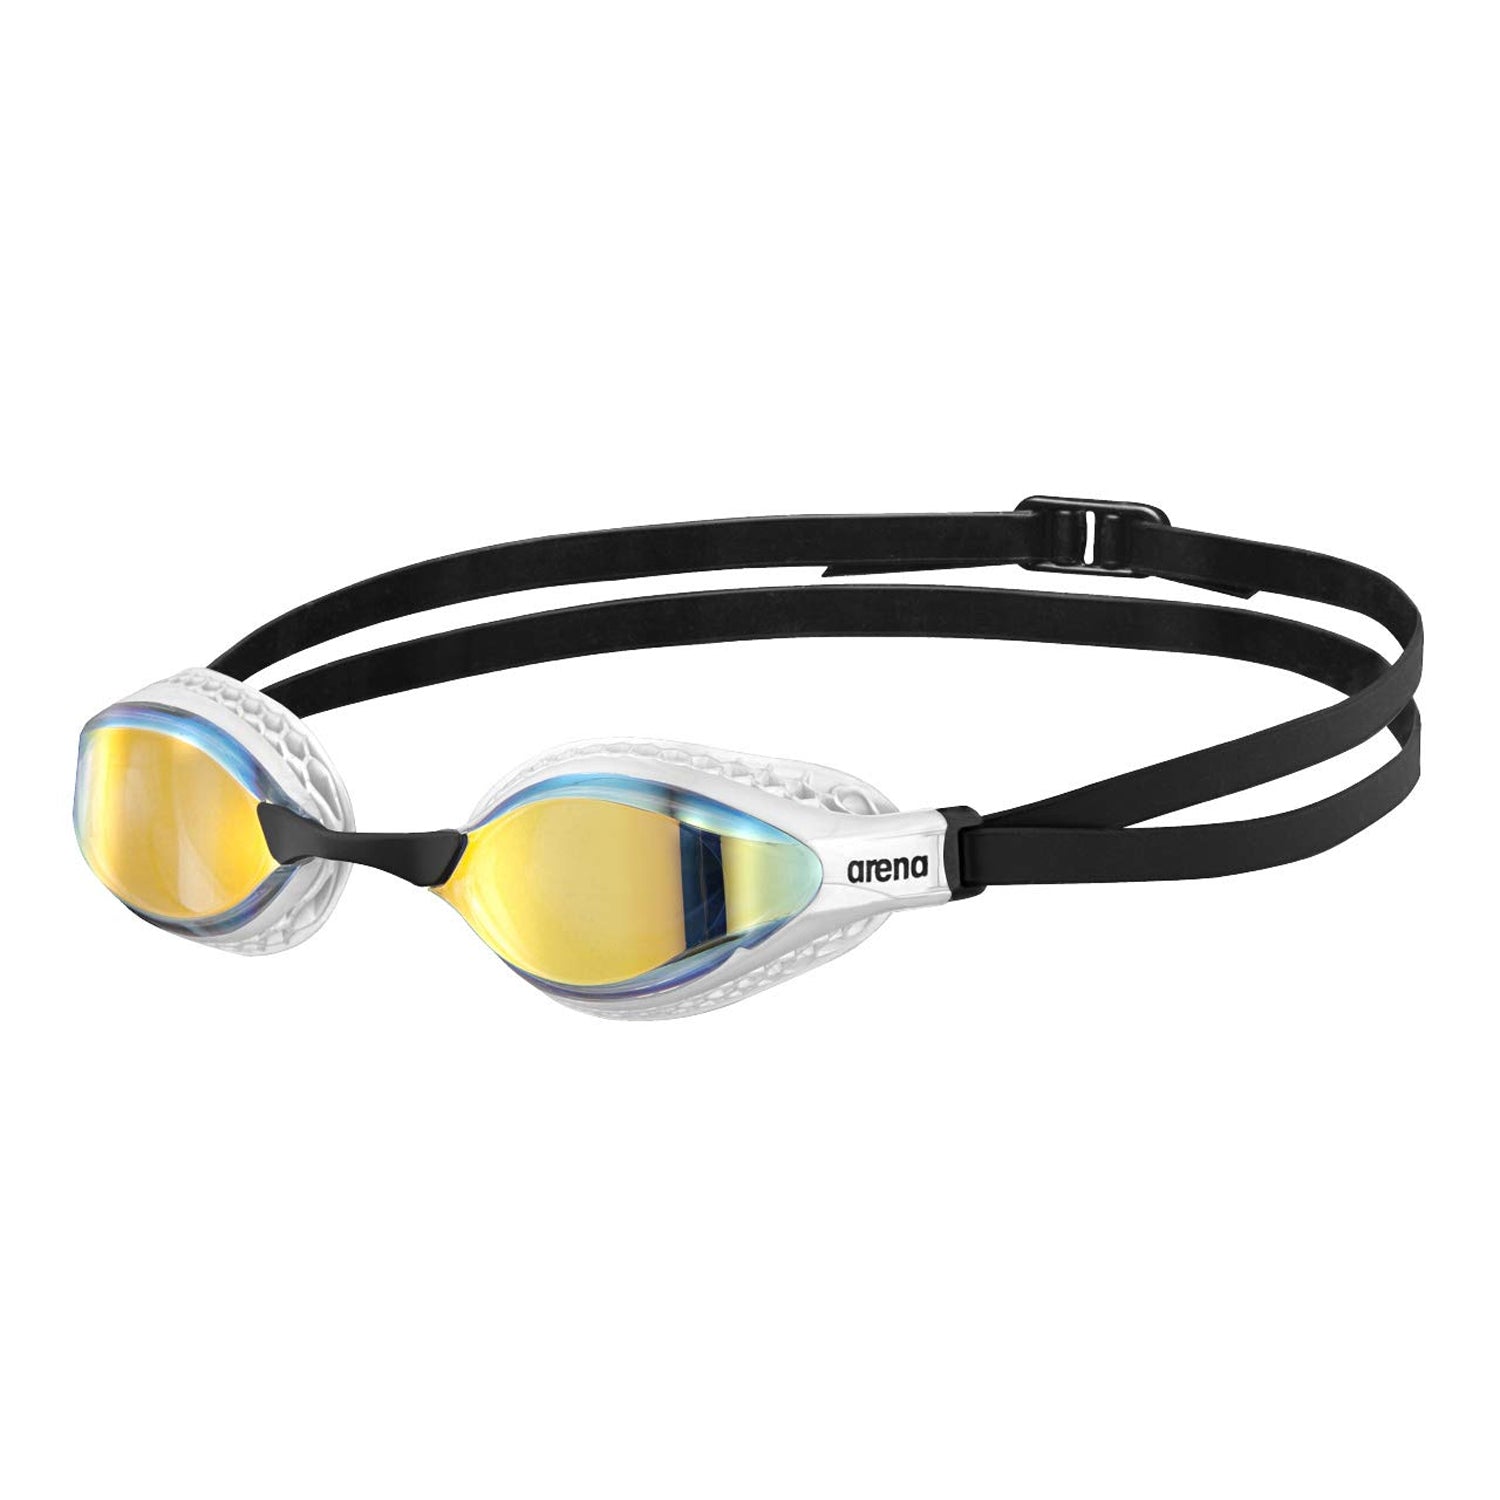 Arena Air Speed Mirror Swim Goggles, Adult - Best Price online Prokicksports.com